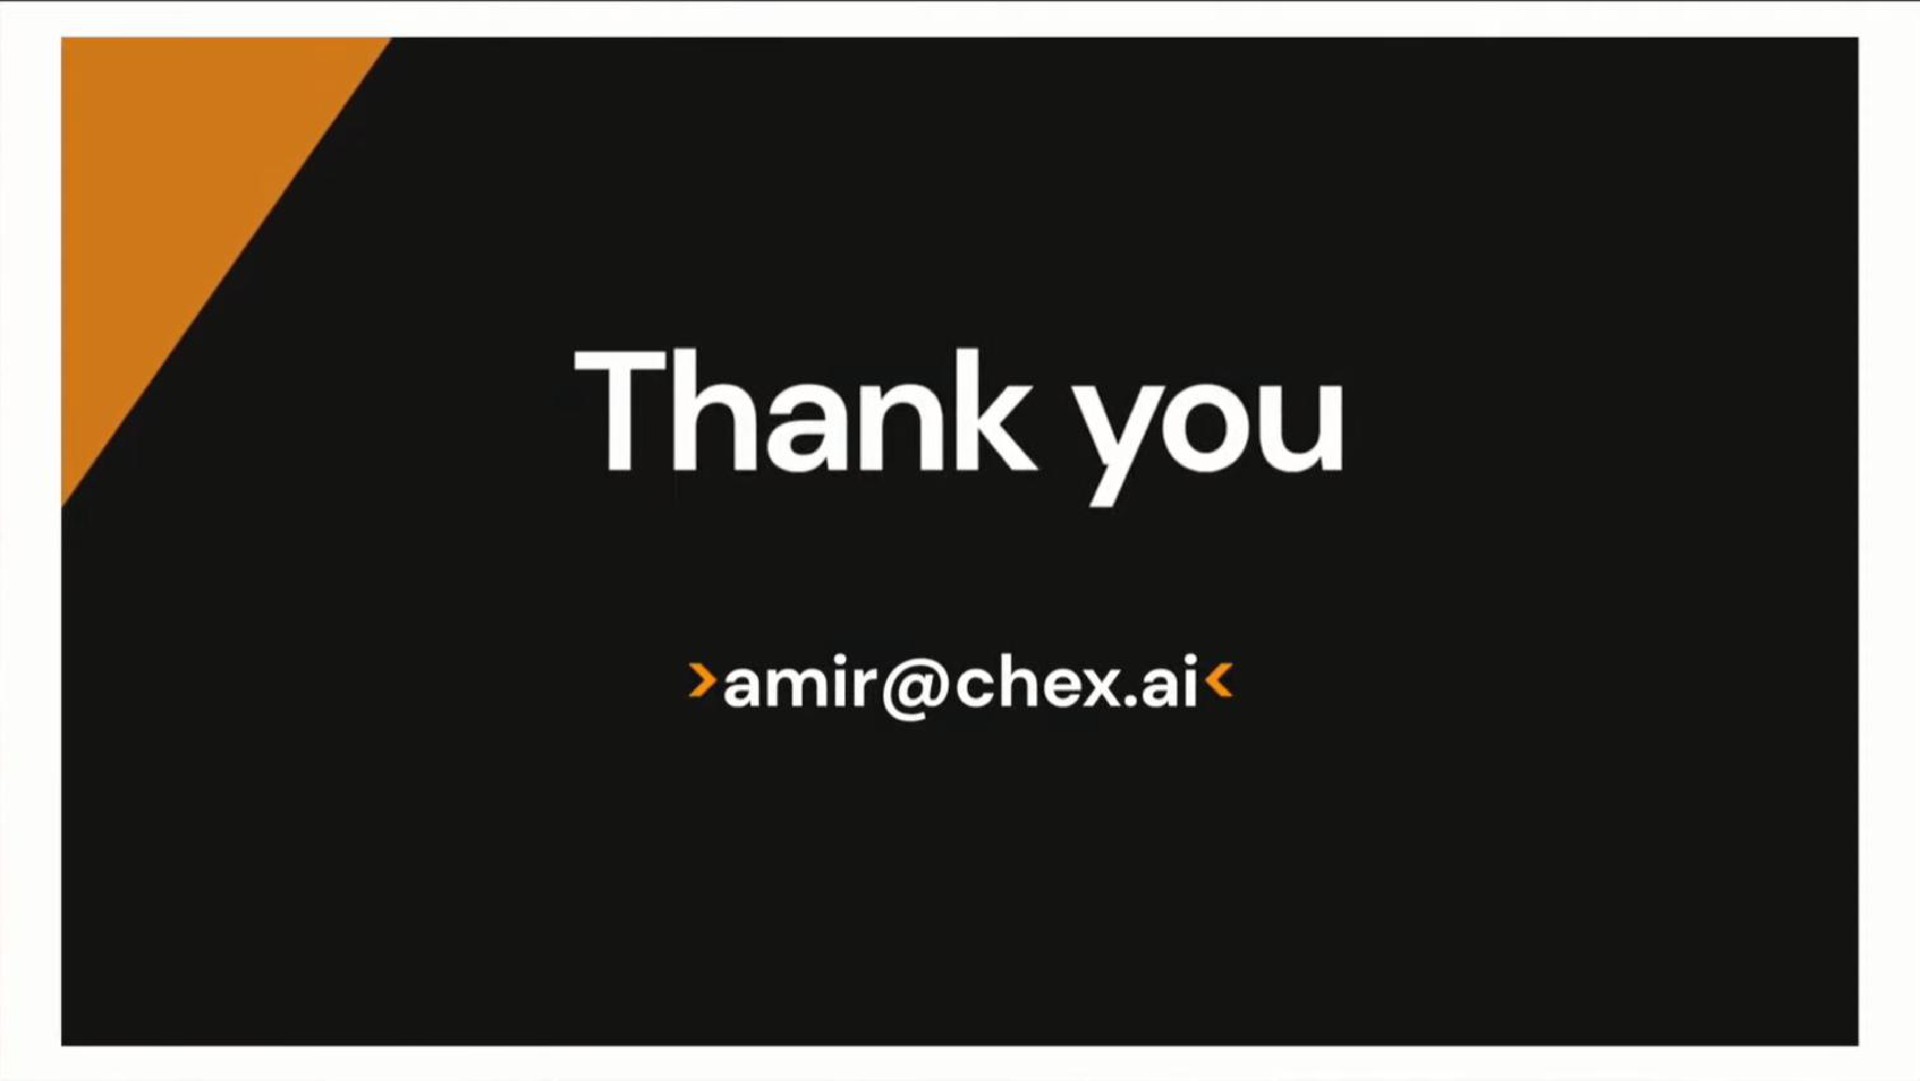 thank you amir | Chex.ai